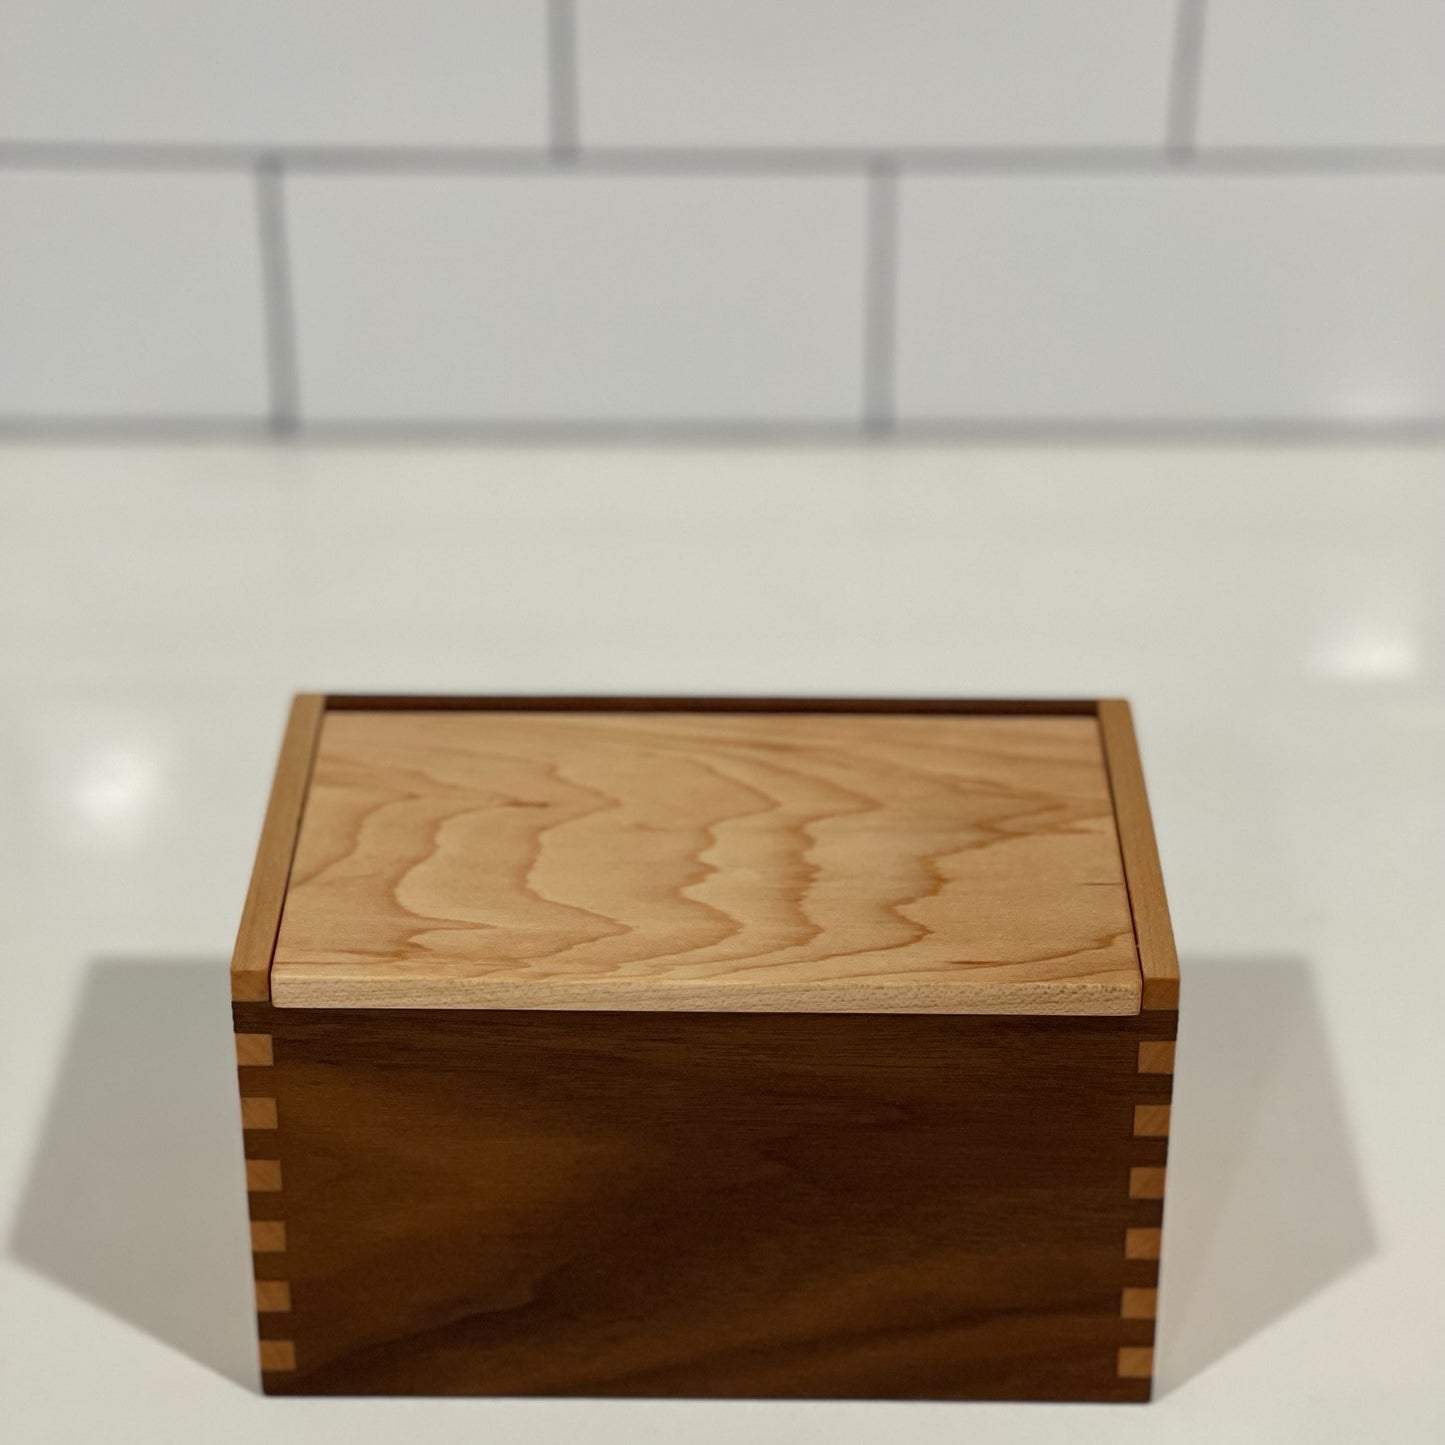 Wood Salt Cellar - Salt Box - Salt Pig - Keepsake Box - Maple and Walnut